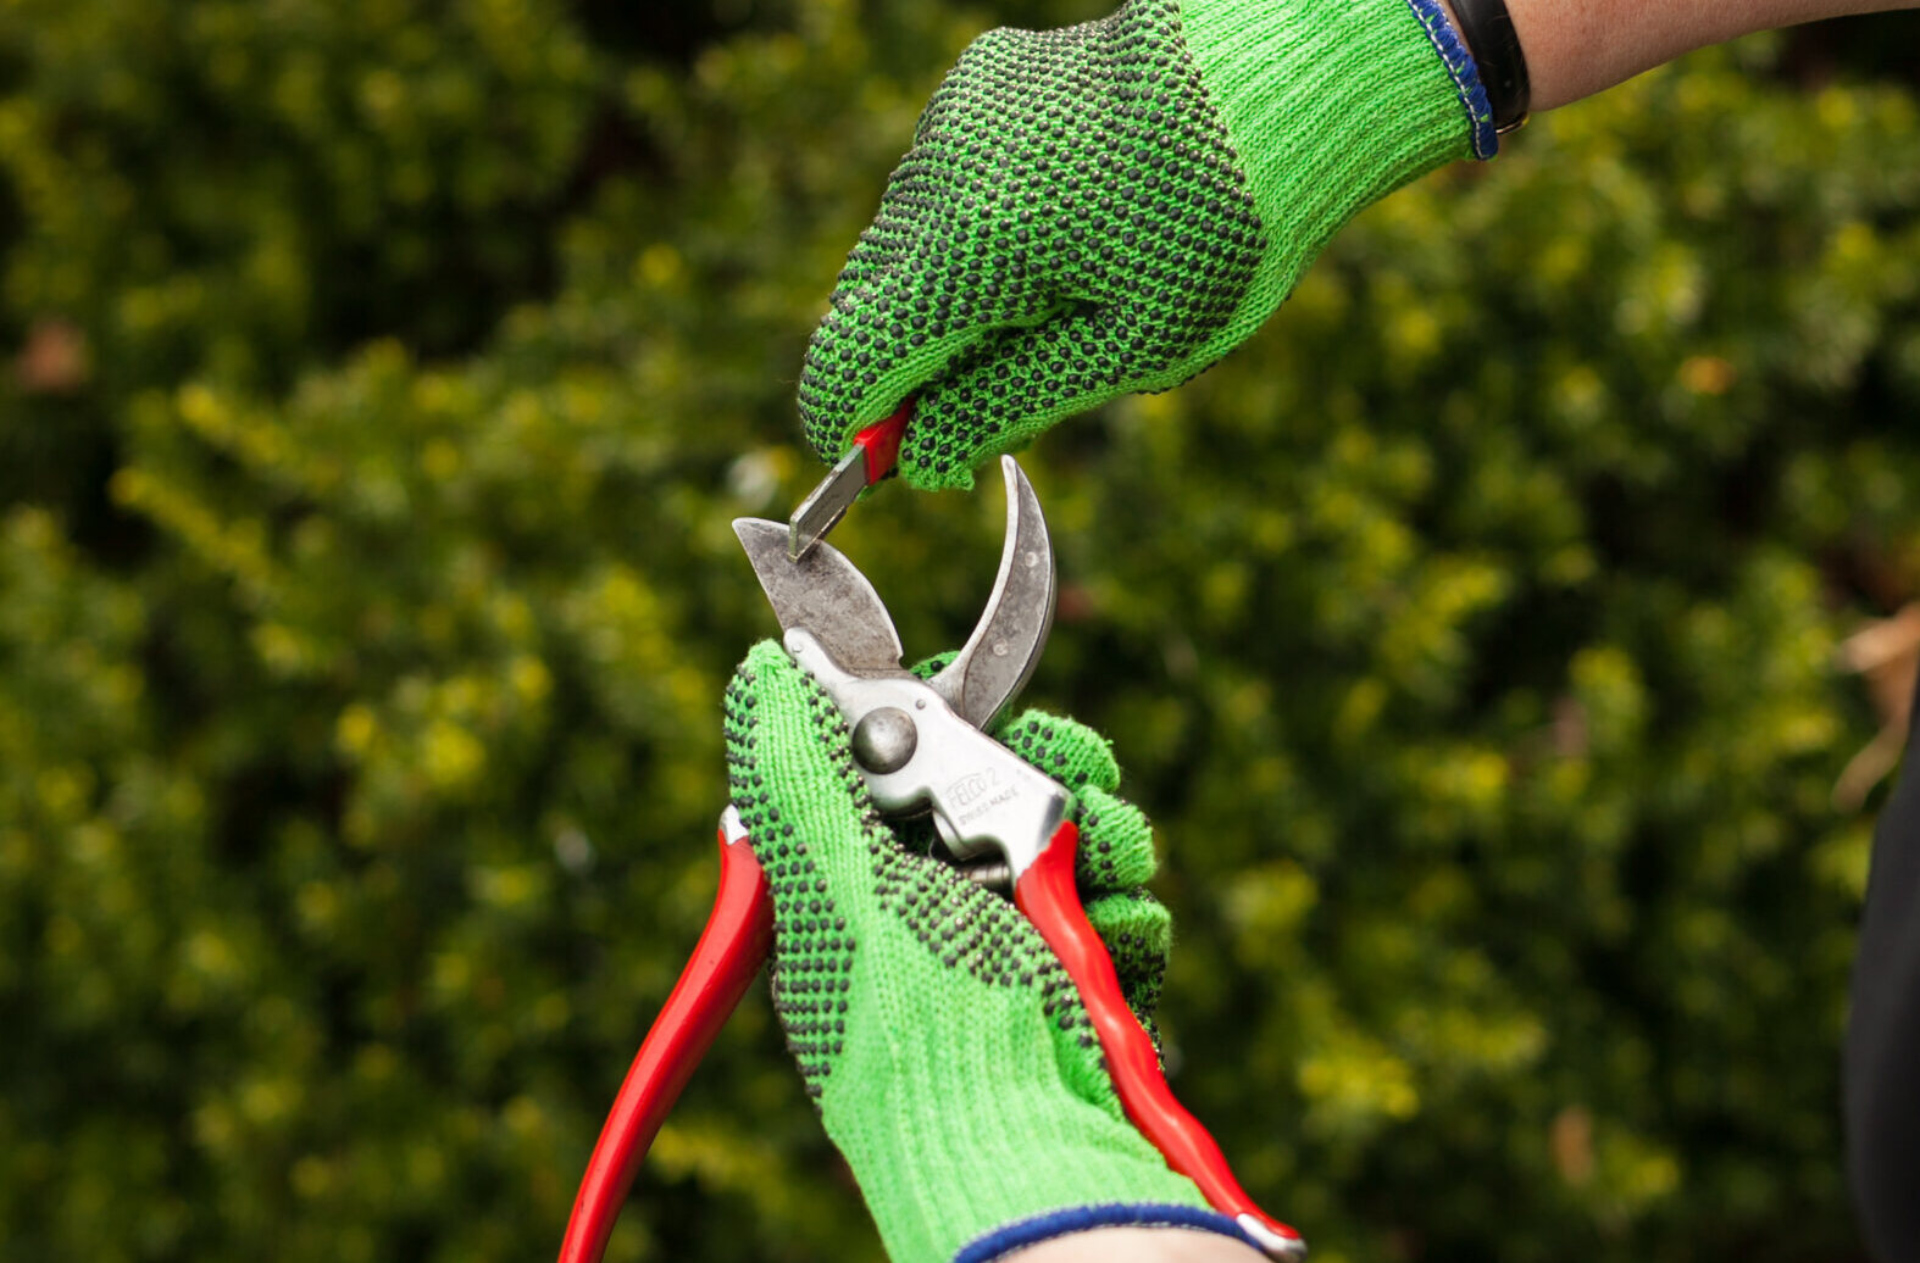 Close up photograph of a gardener's hands sharpening a pair of gardening pruners